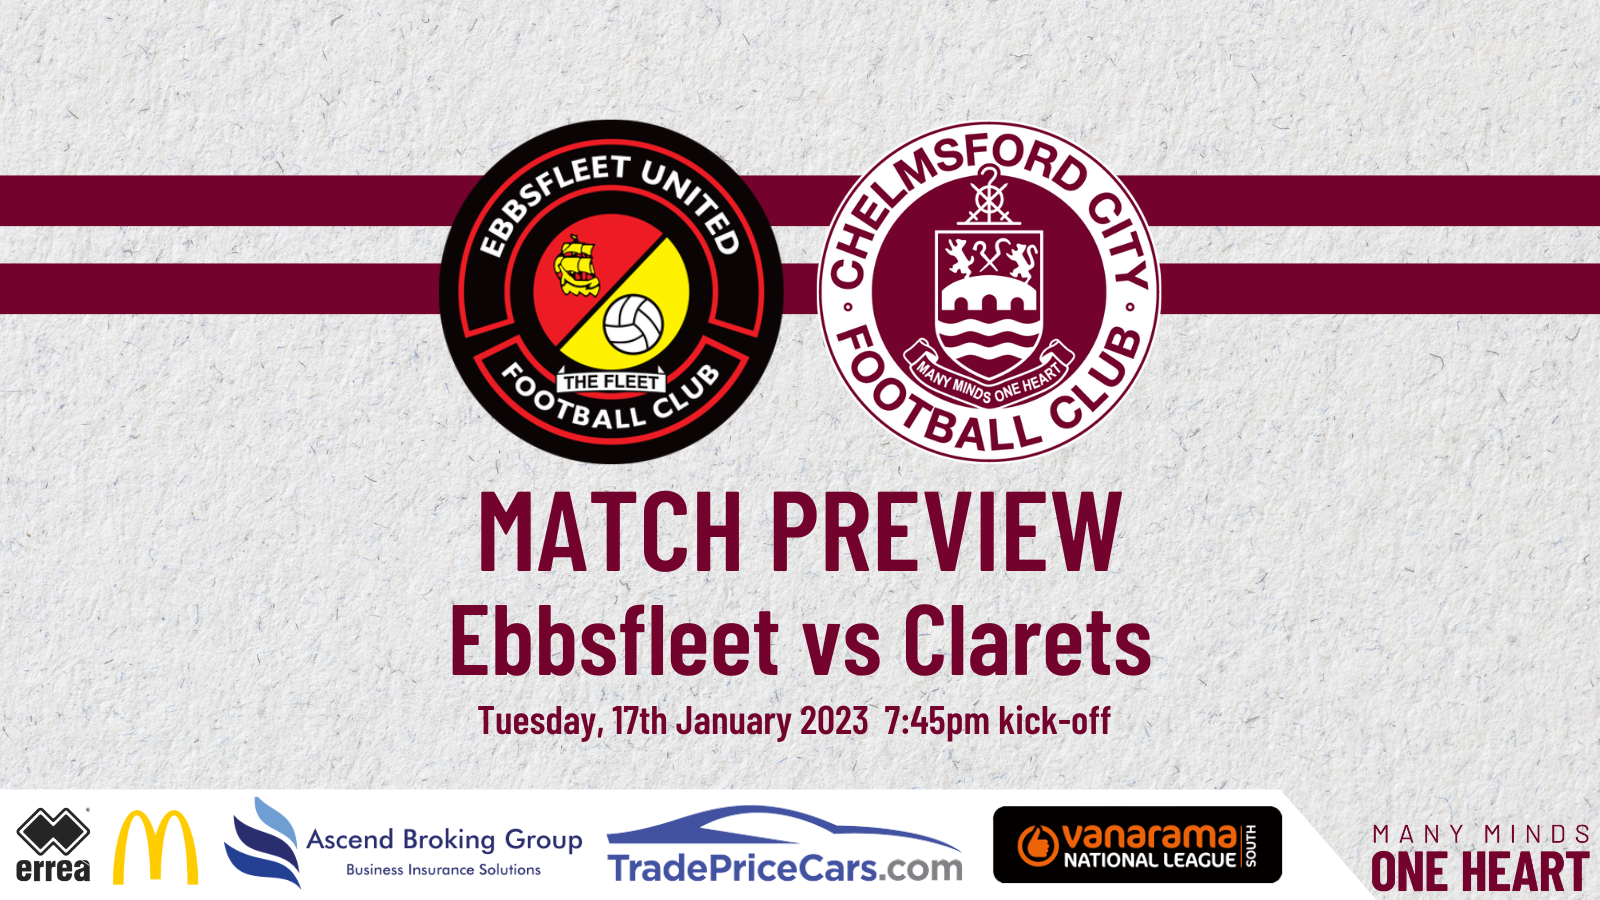 Ticket Info  Ebbsfleet United (A) - News - Colchester United